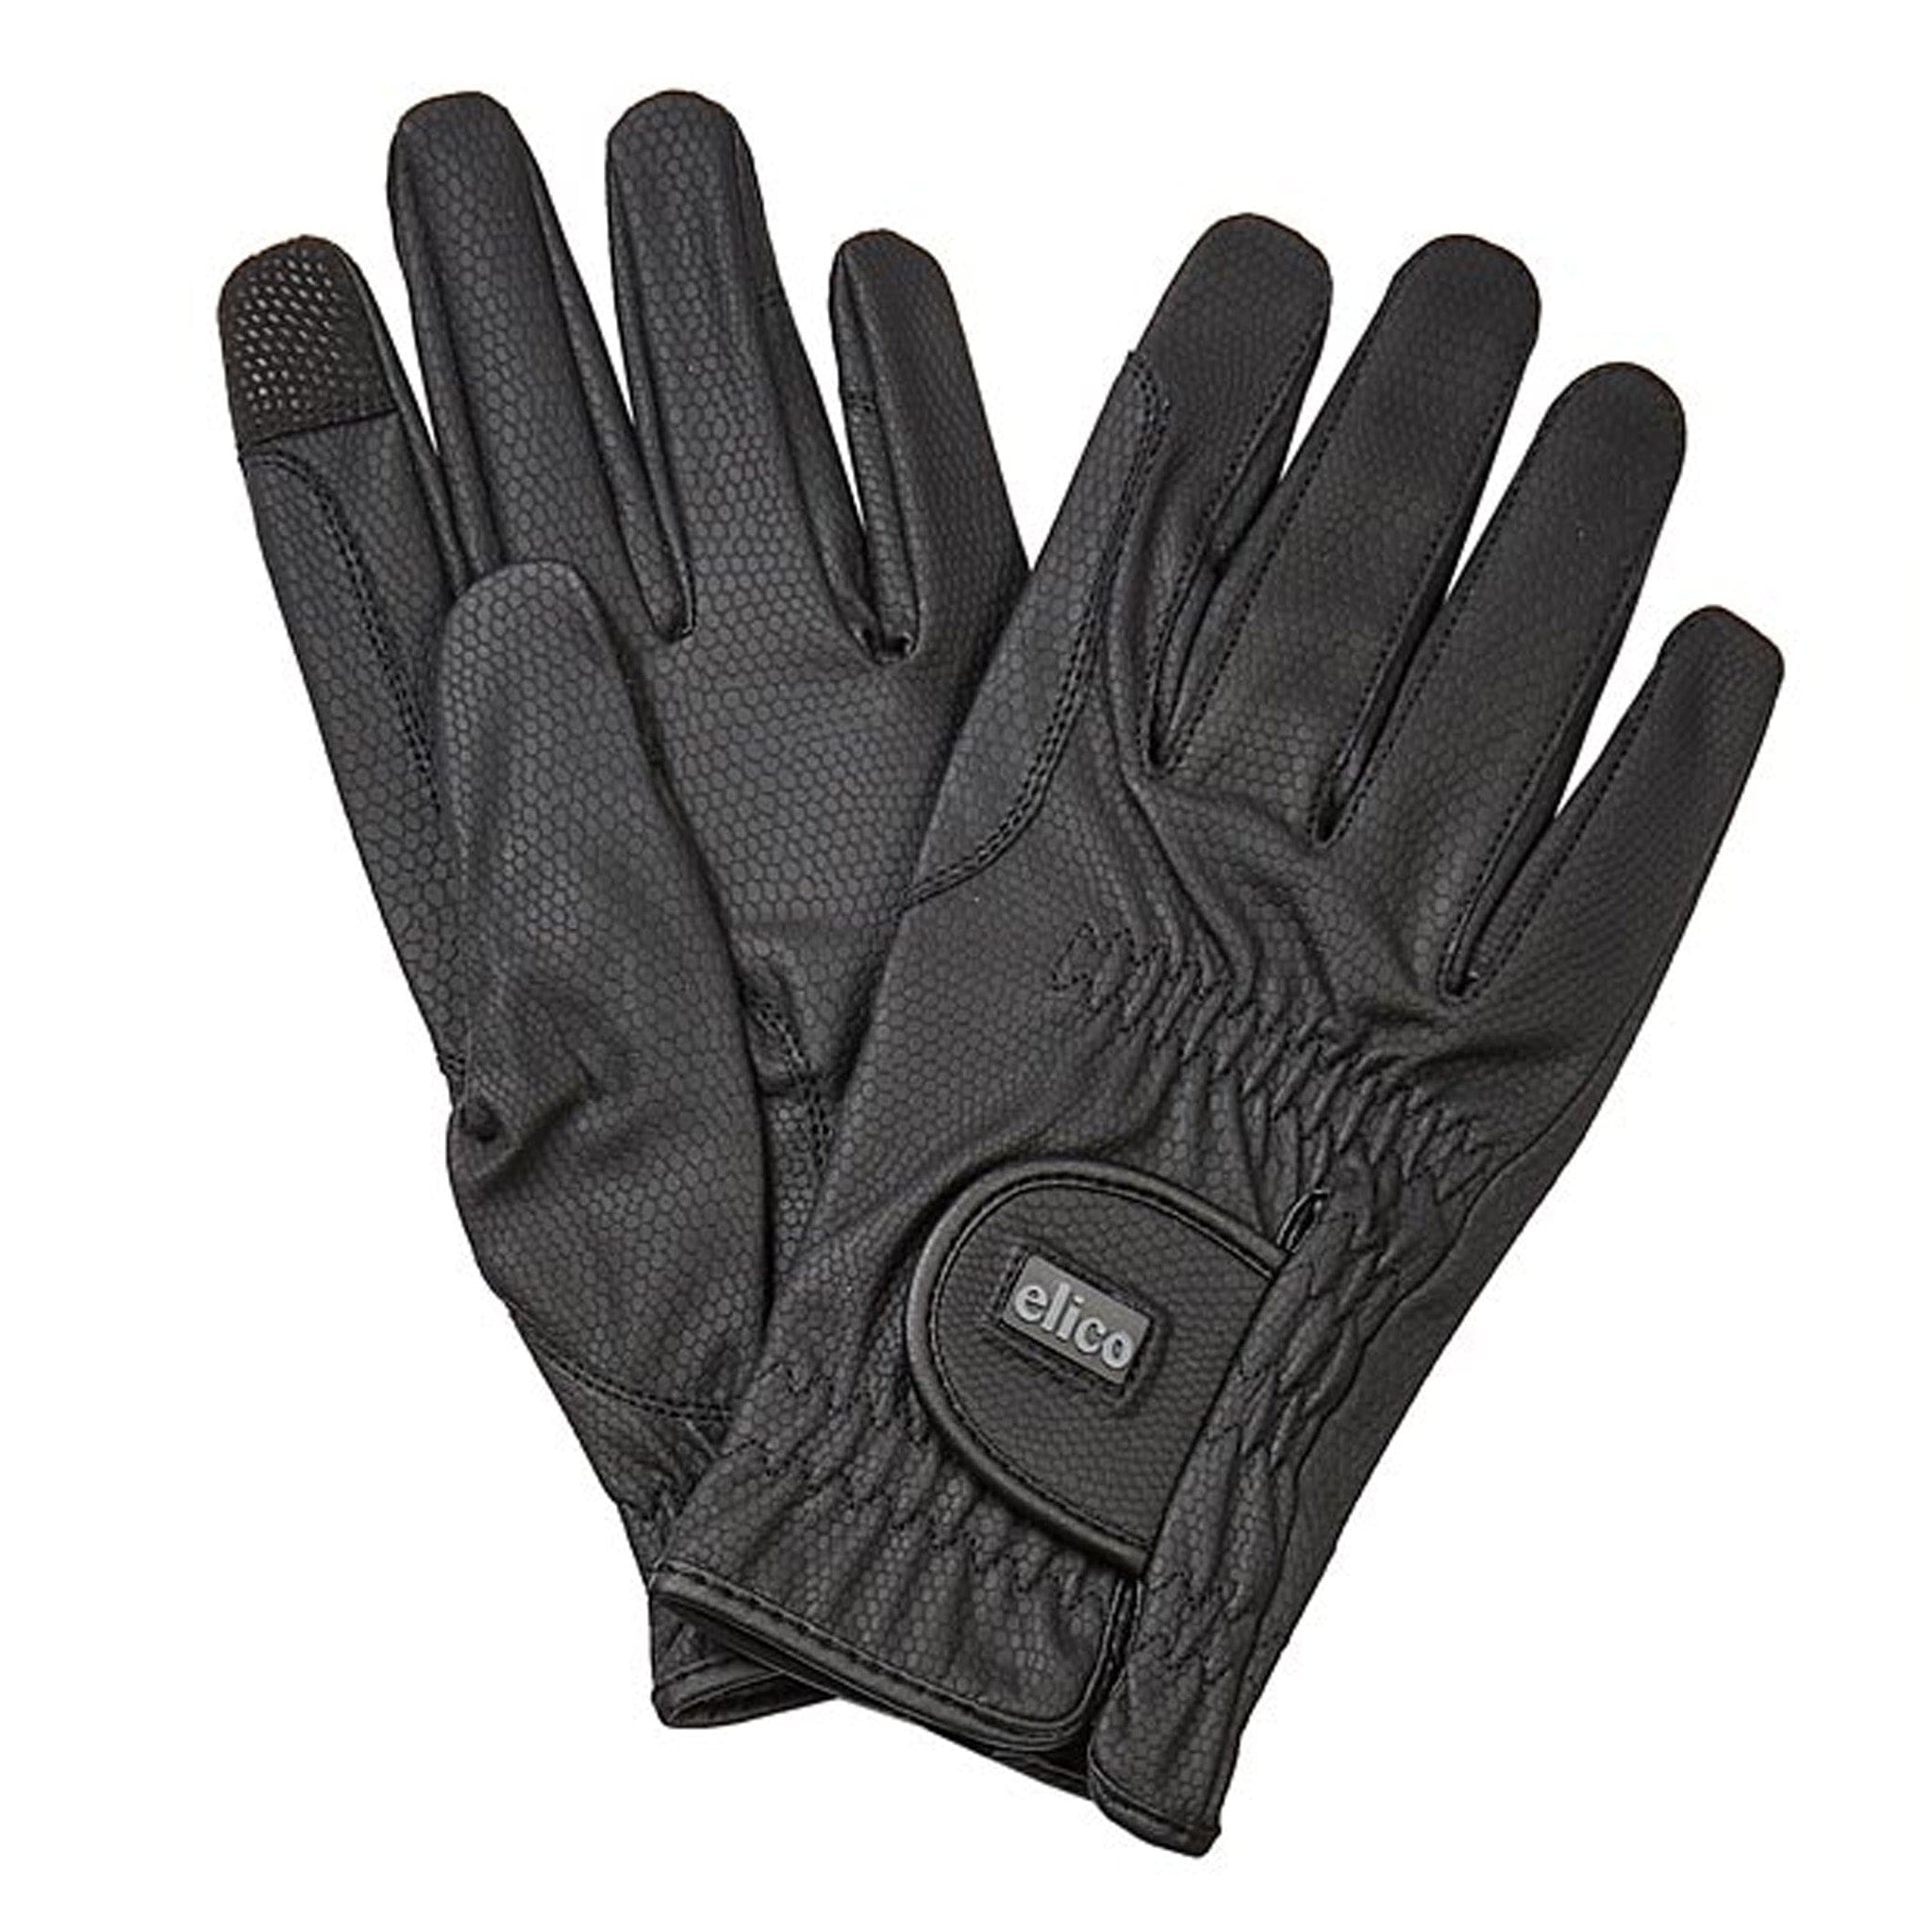 Elico Chatsworth Gloves